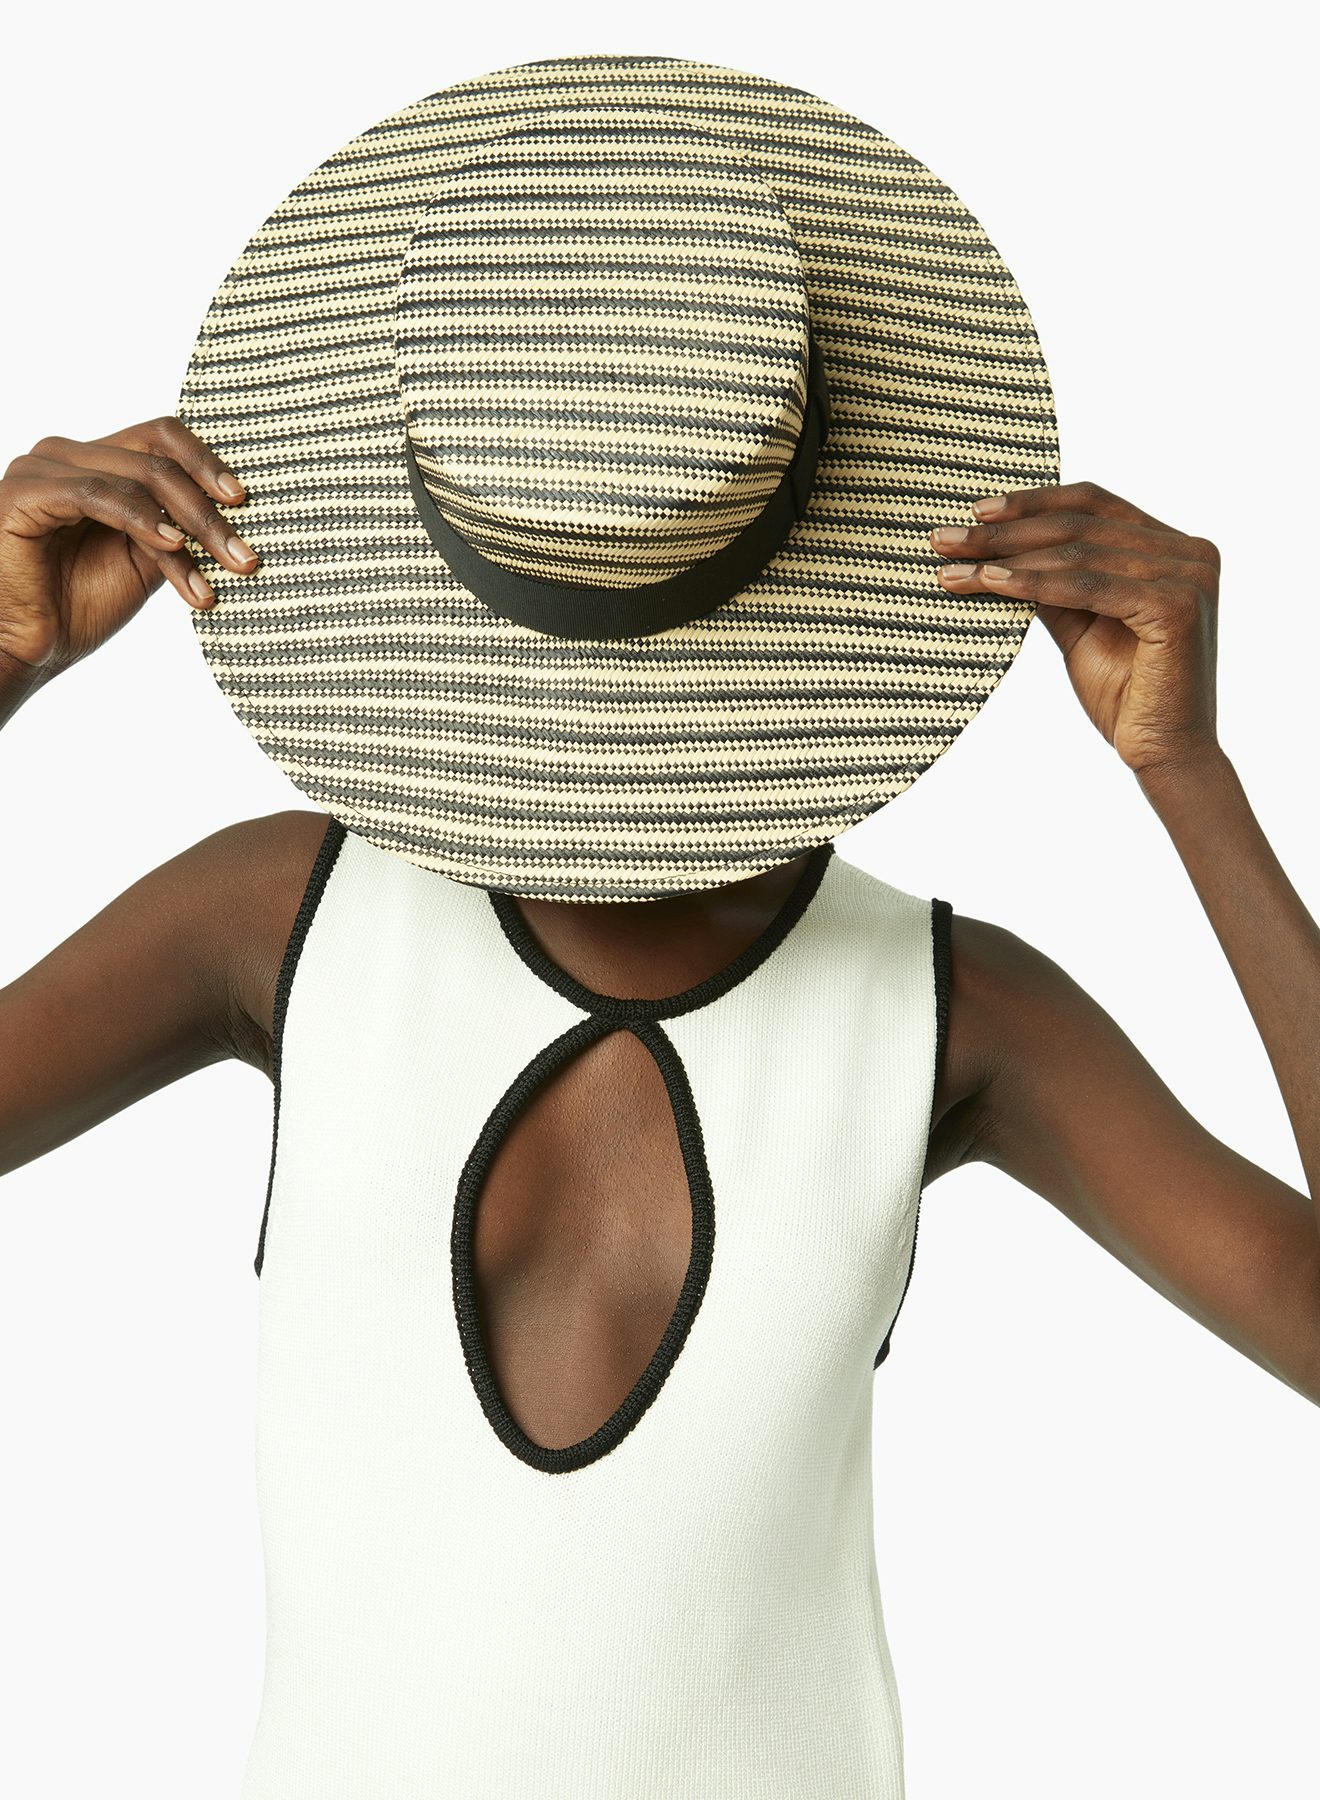 Stripped raffia canotier hat in sand and black - Nina Ricci